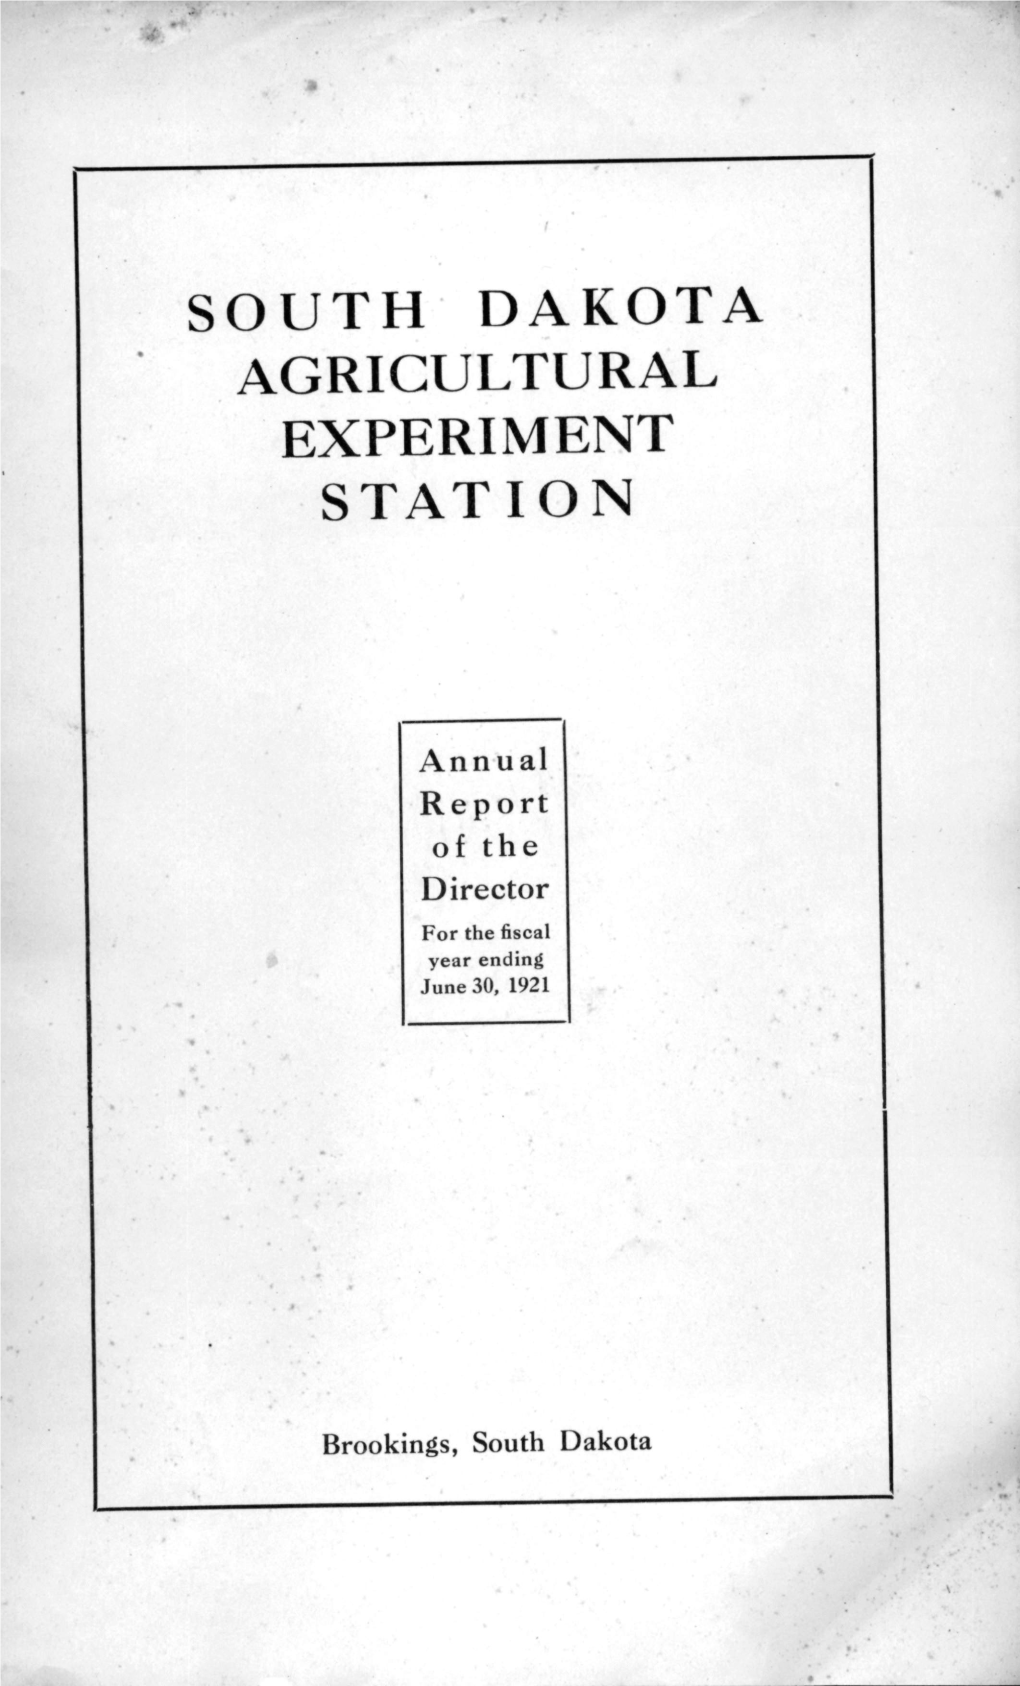 South Dakota Agricultural Experiment Station